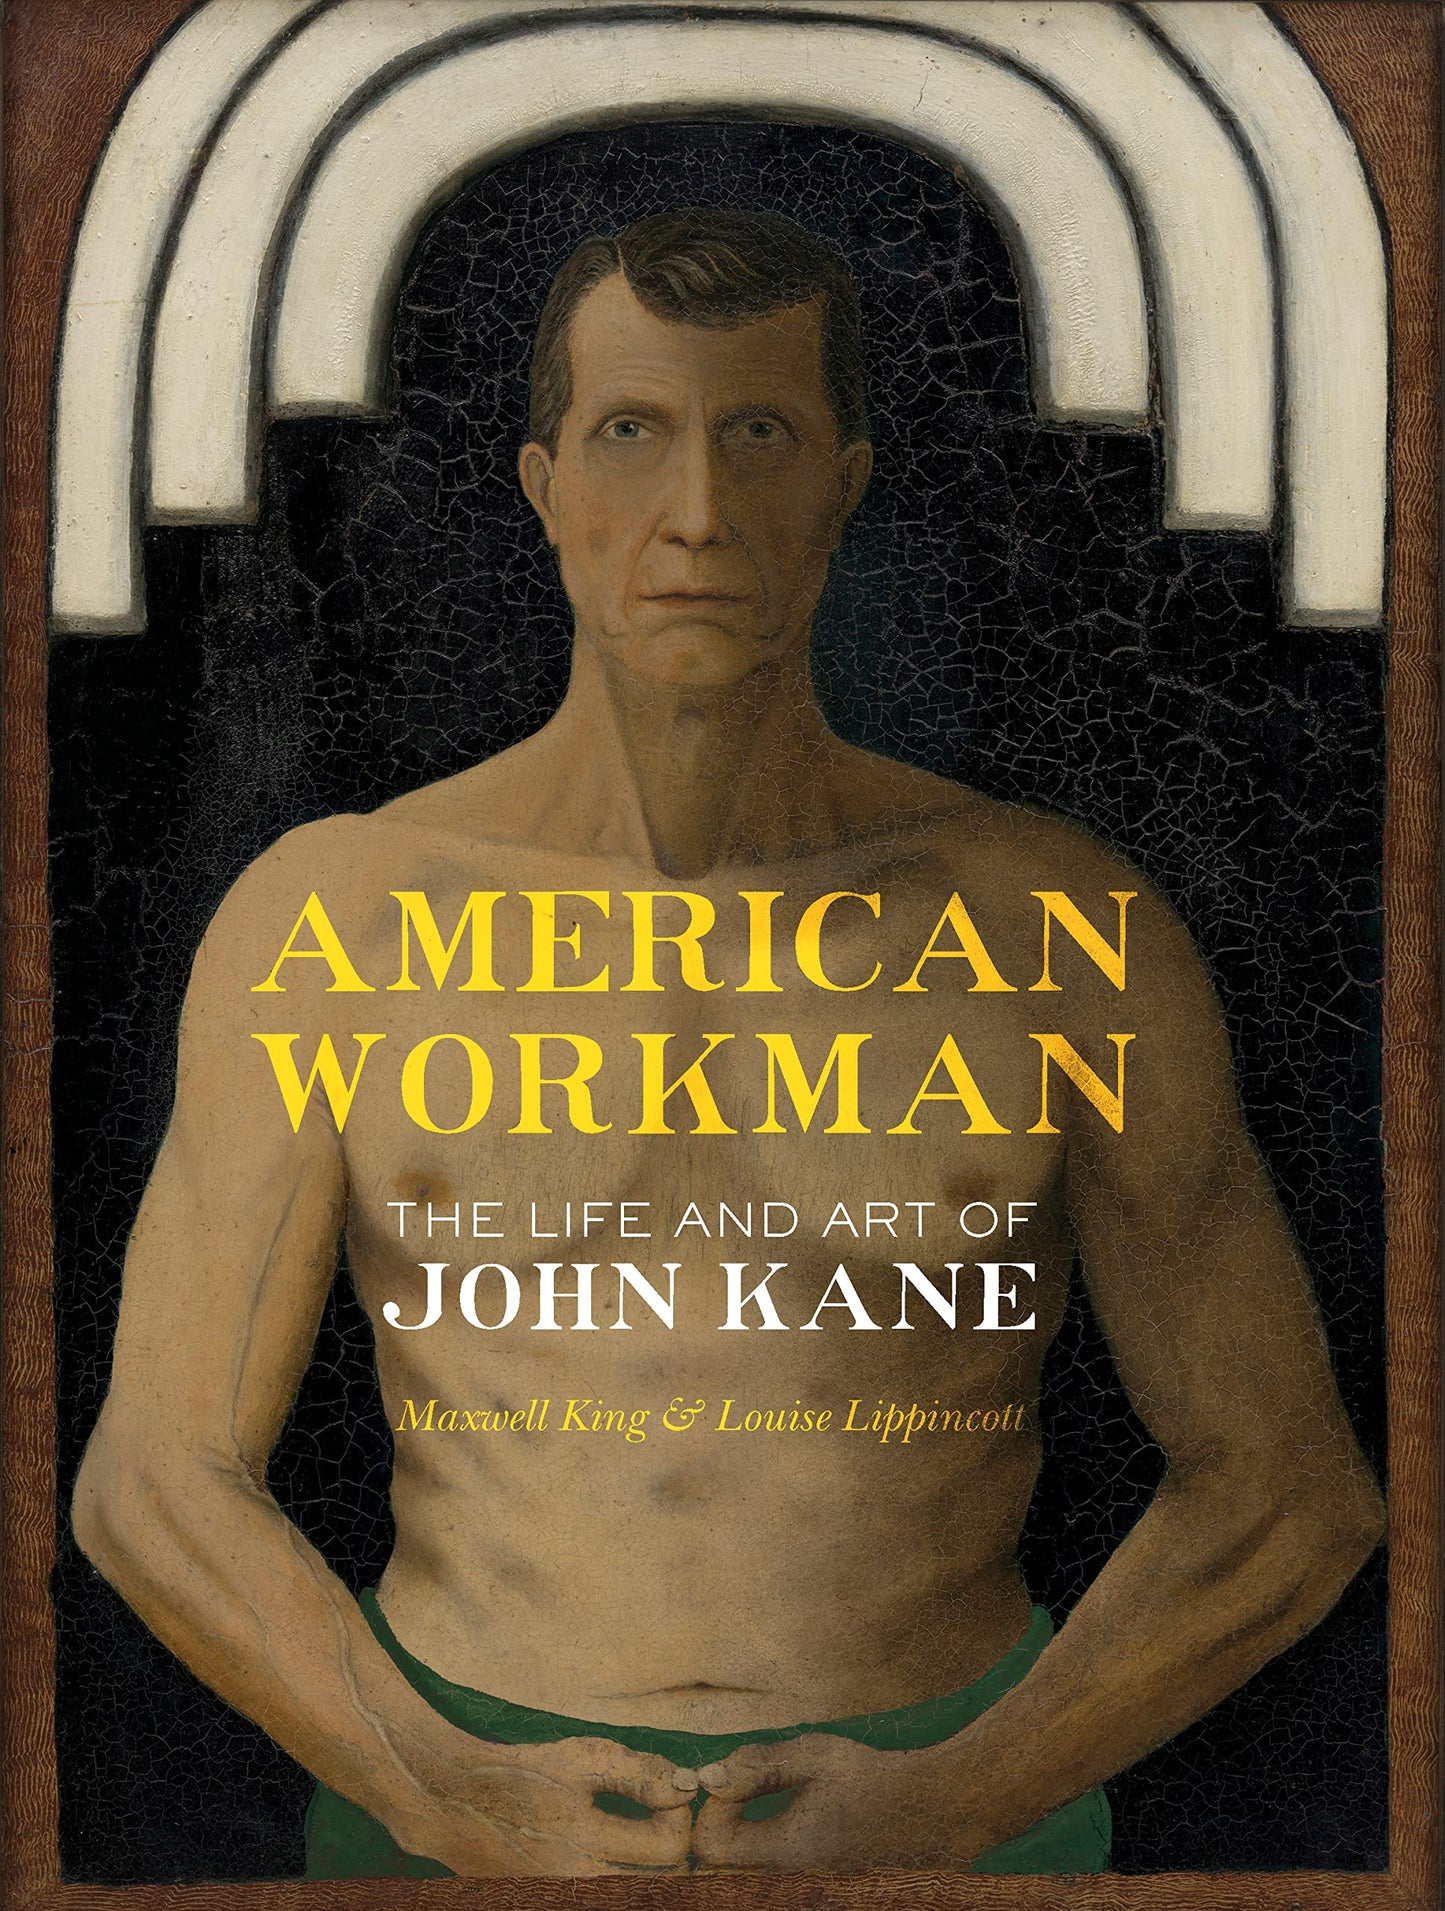 American Workman: The Life and Art of John Kane